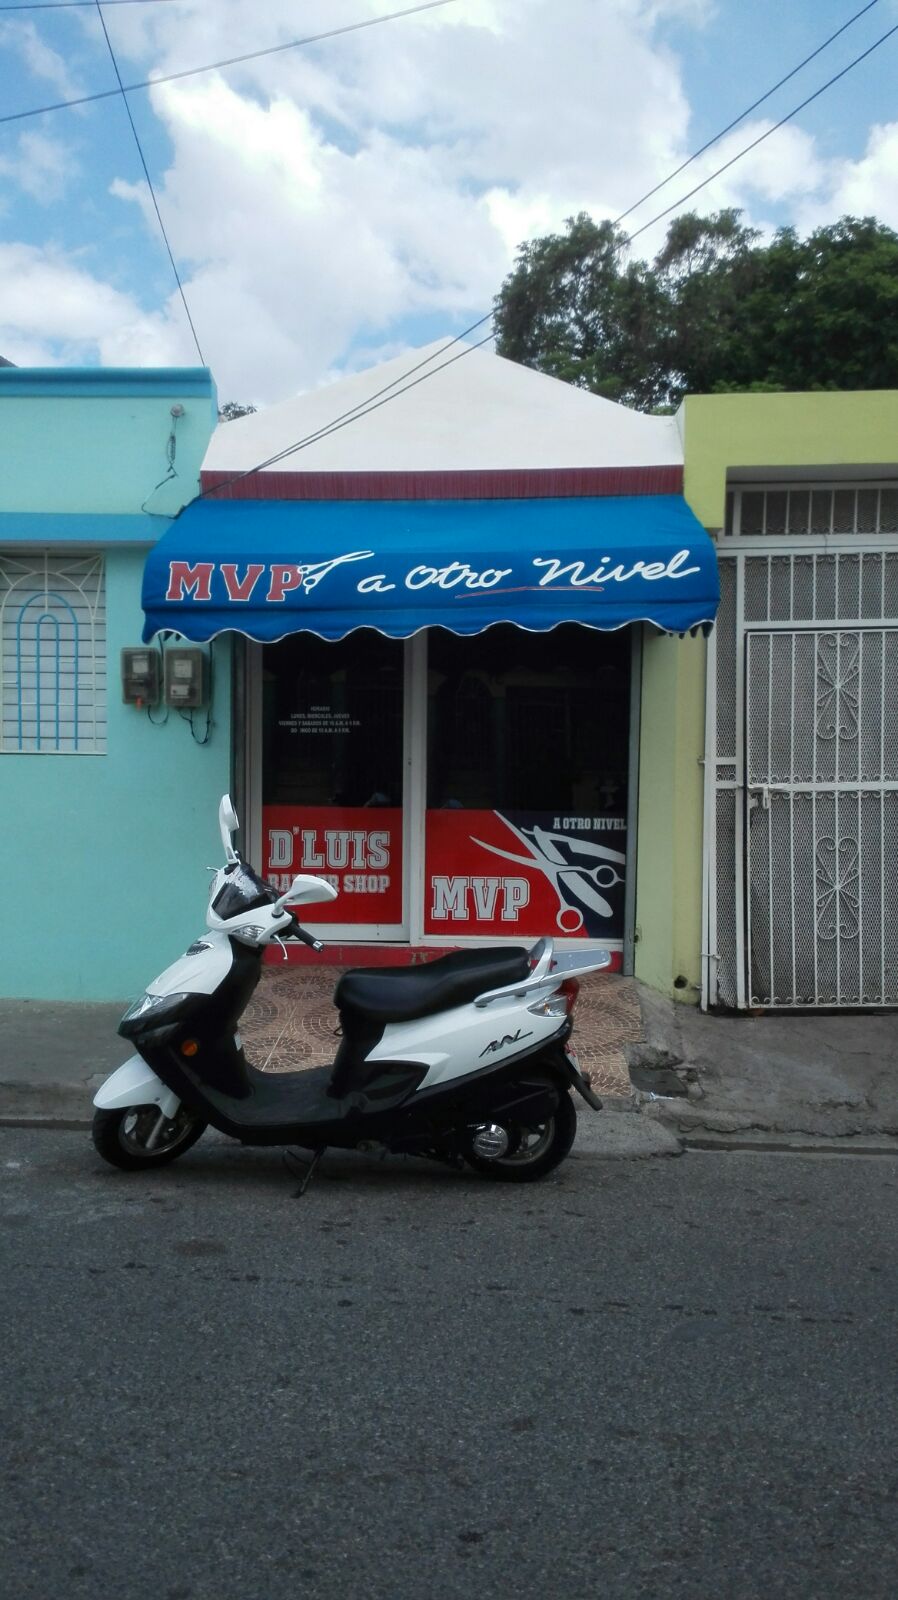 Luis Barber Shop